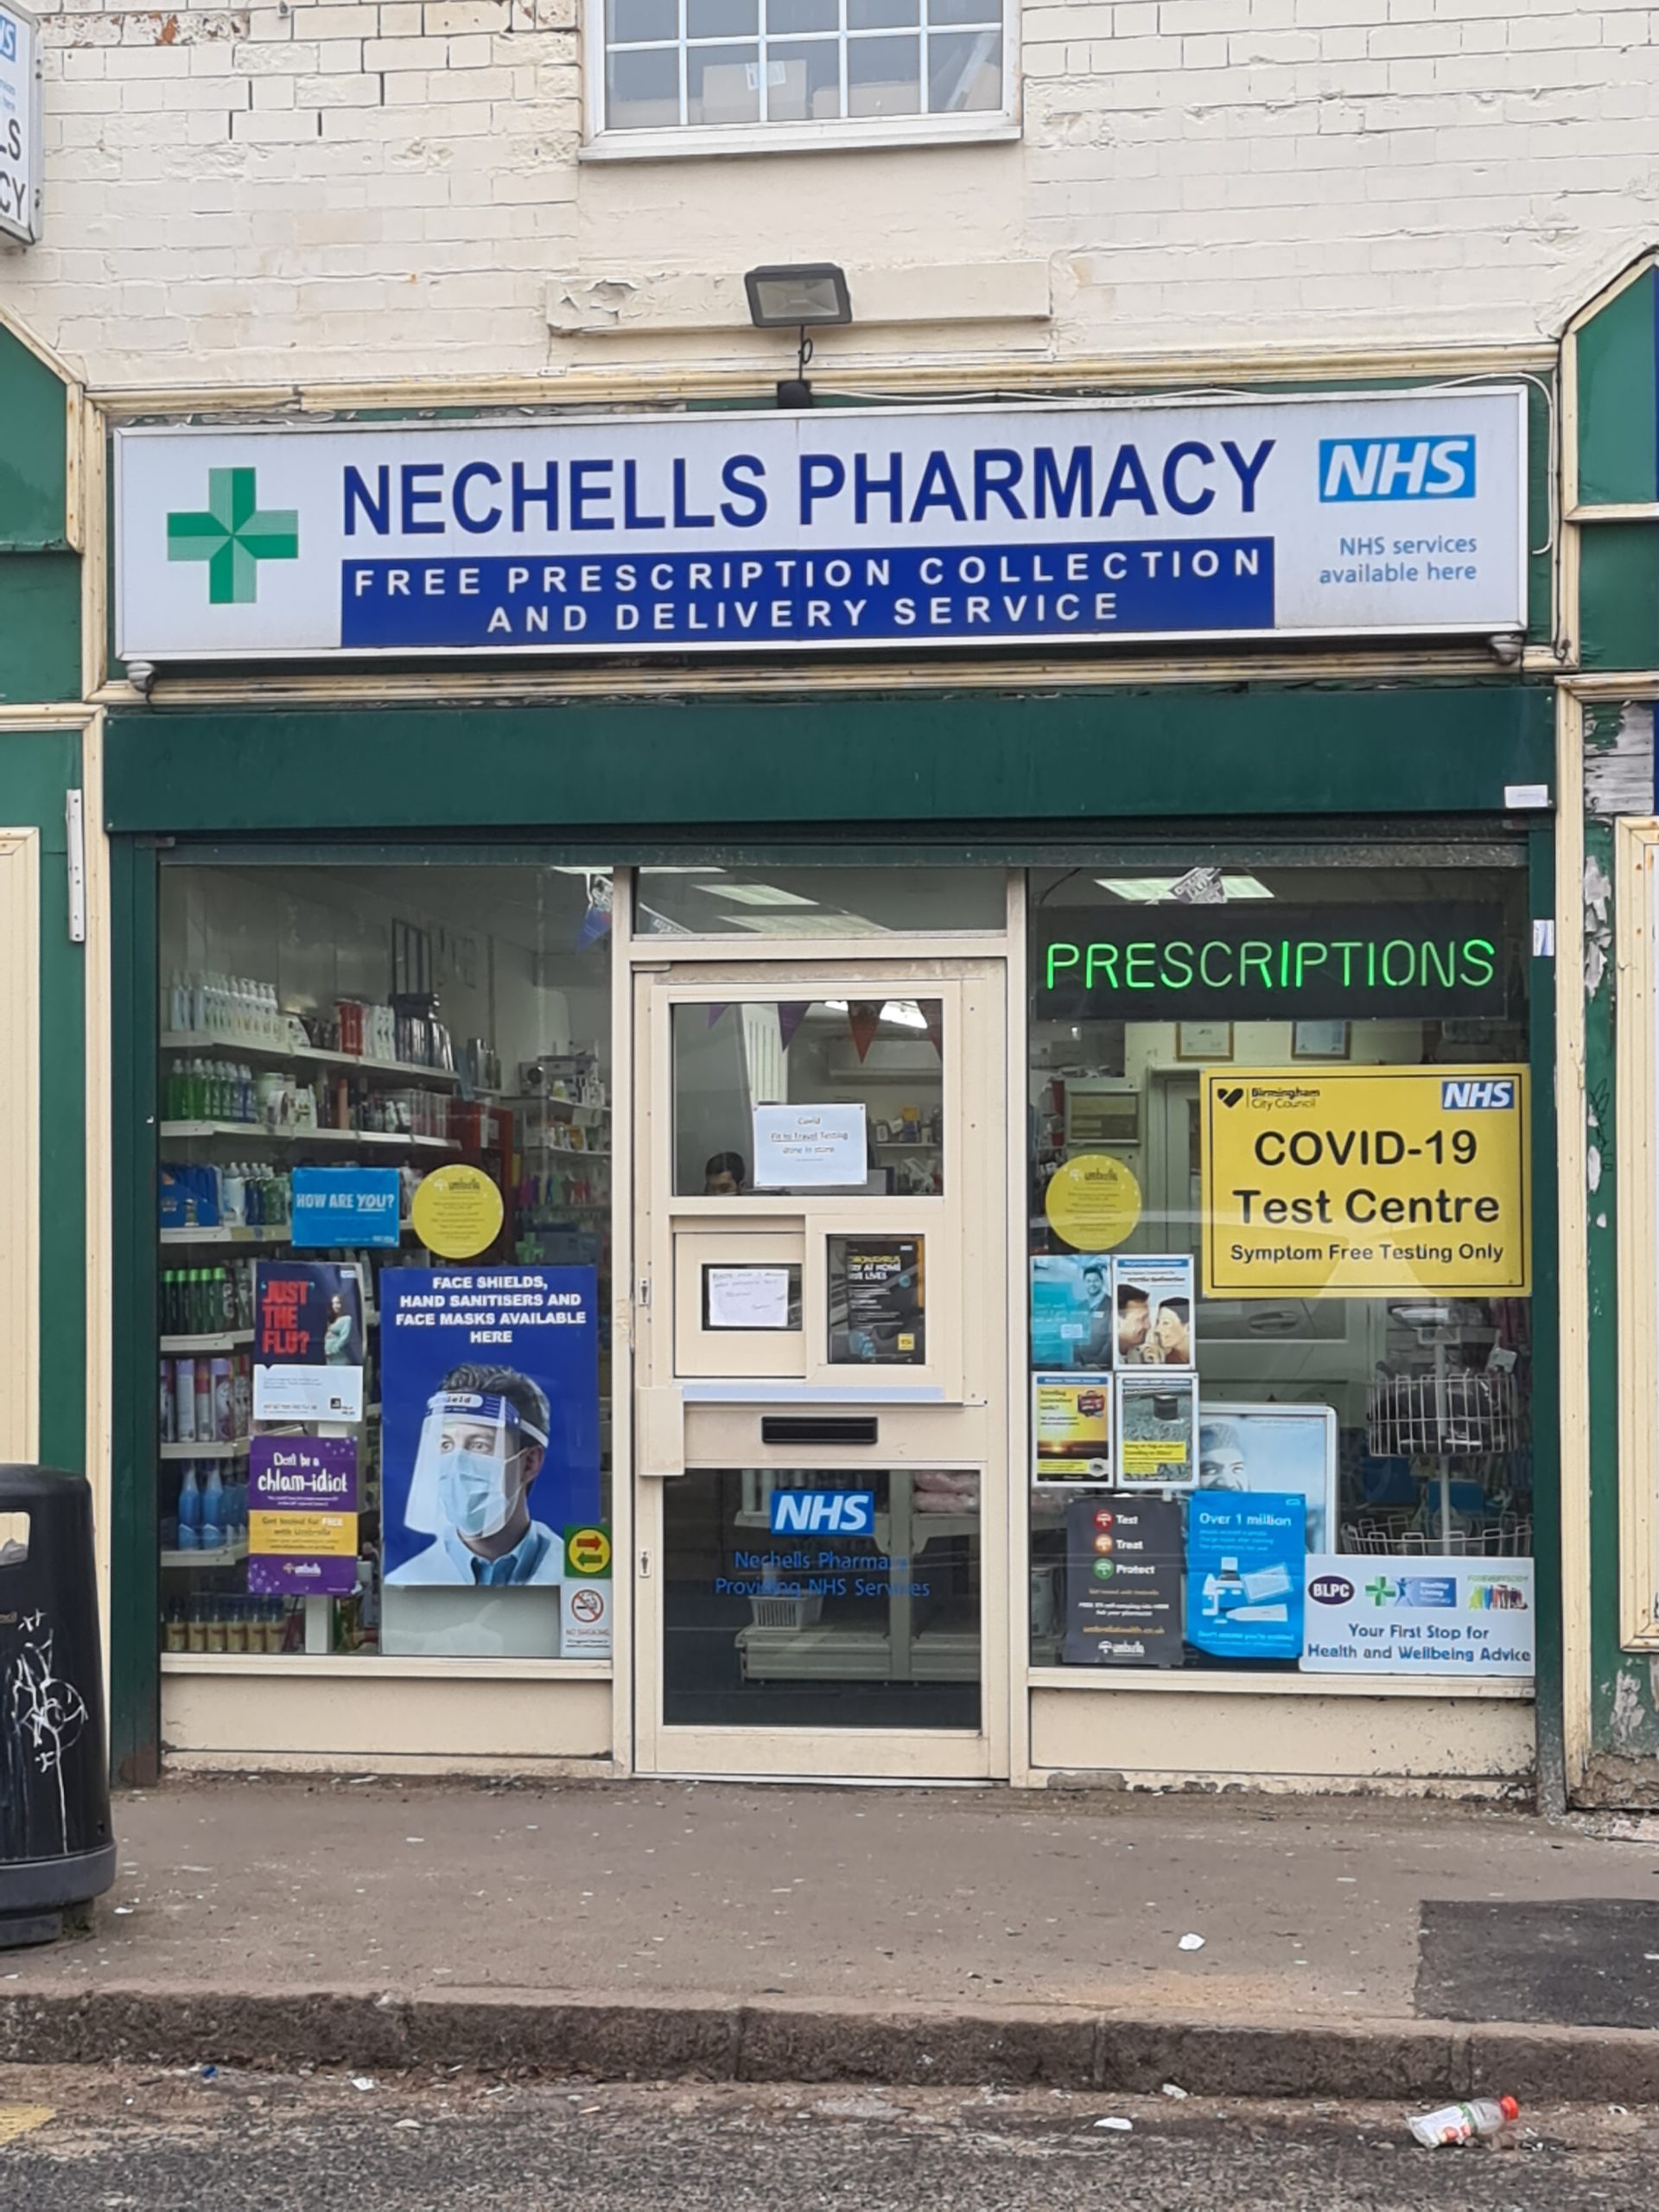 zenith pharmacy & travel clinic birmingham